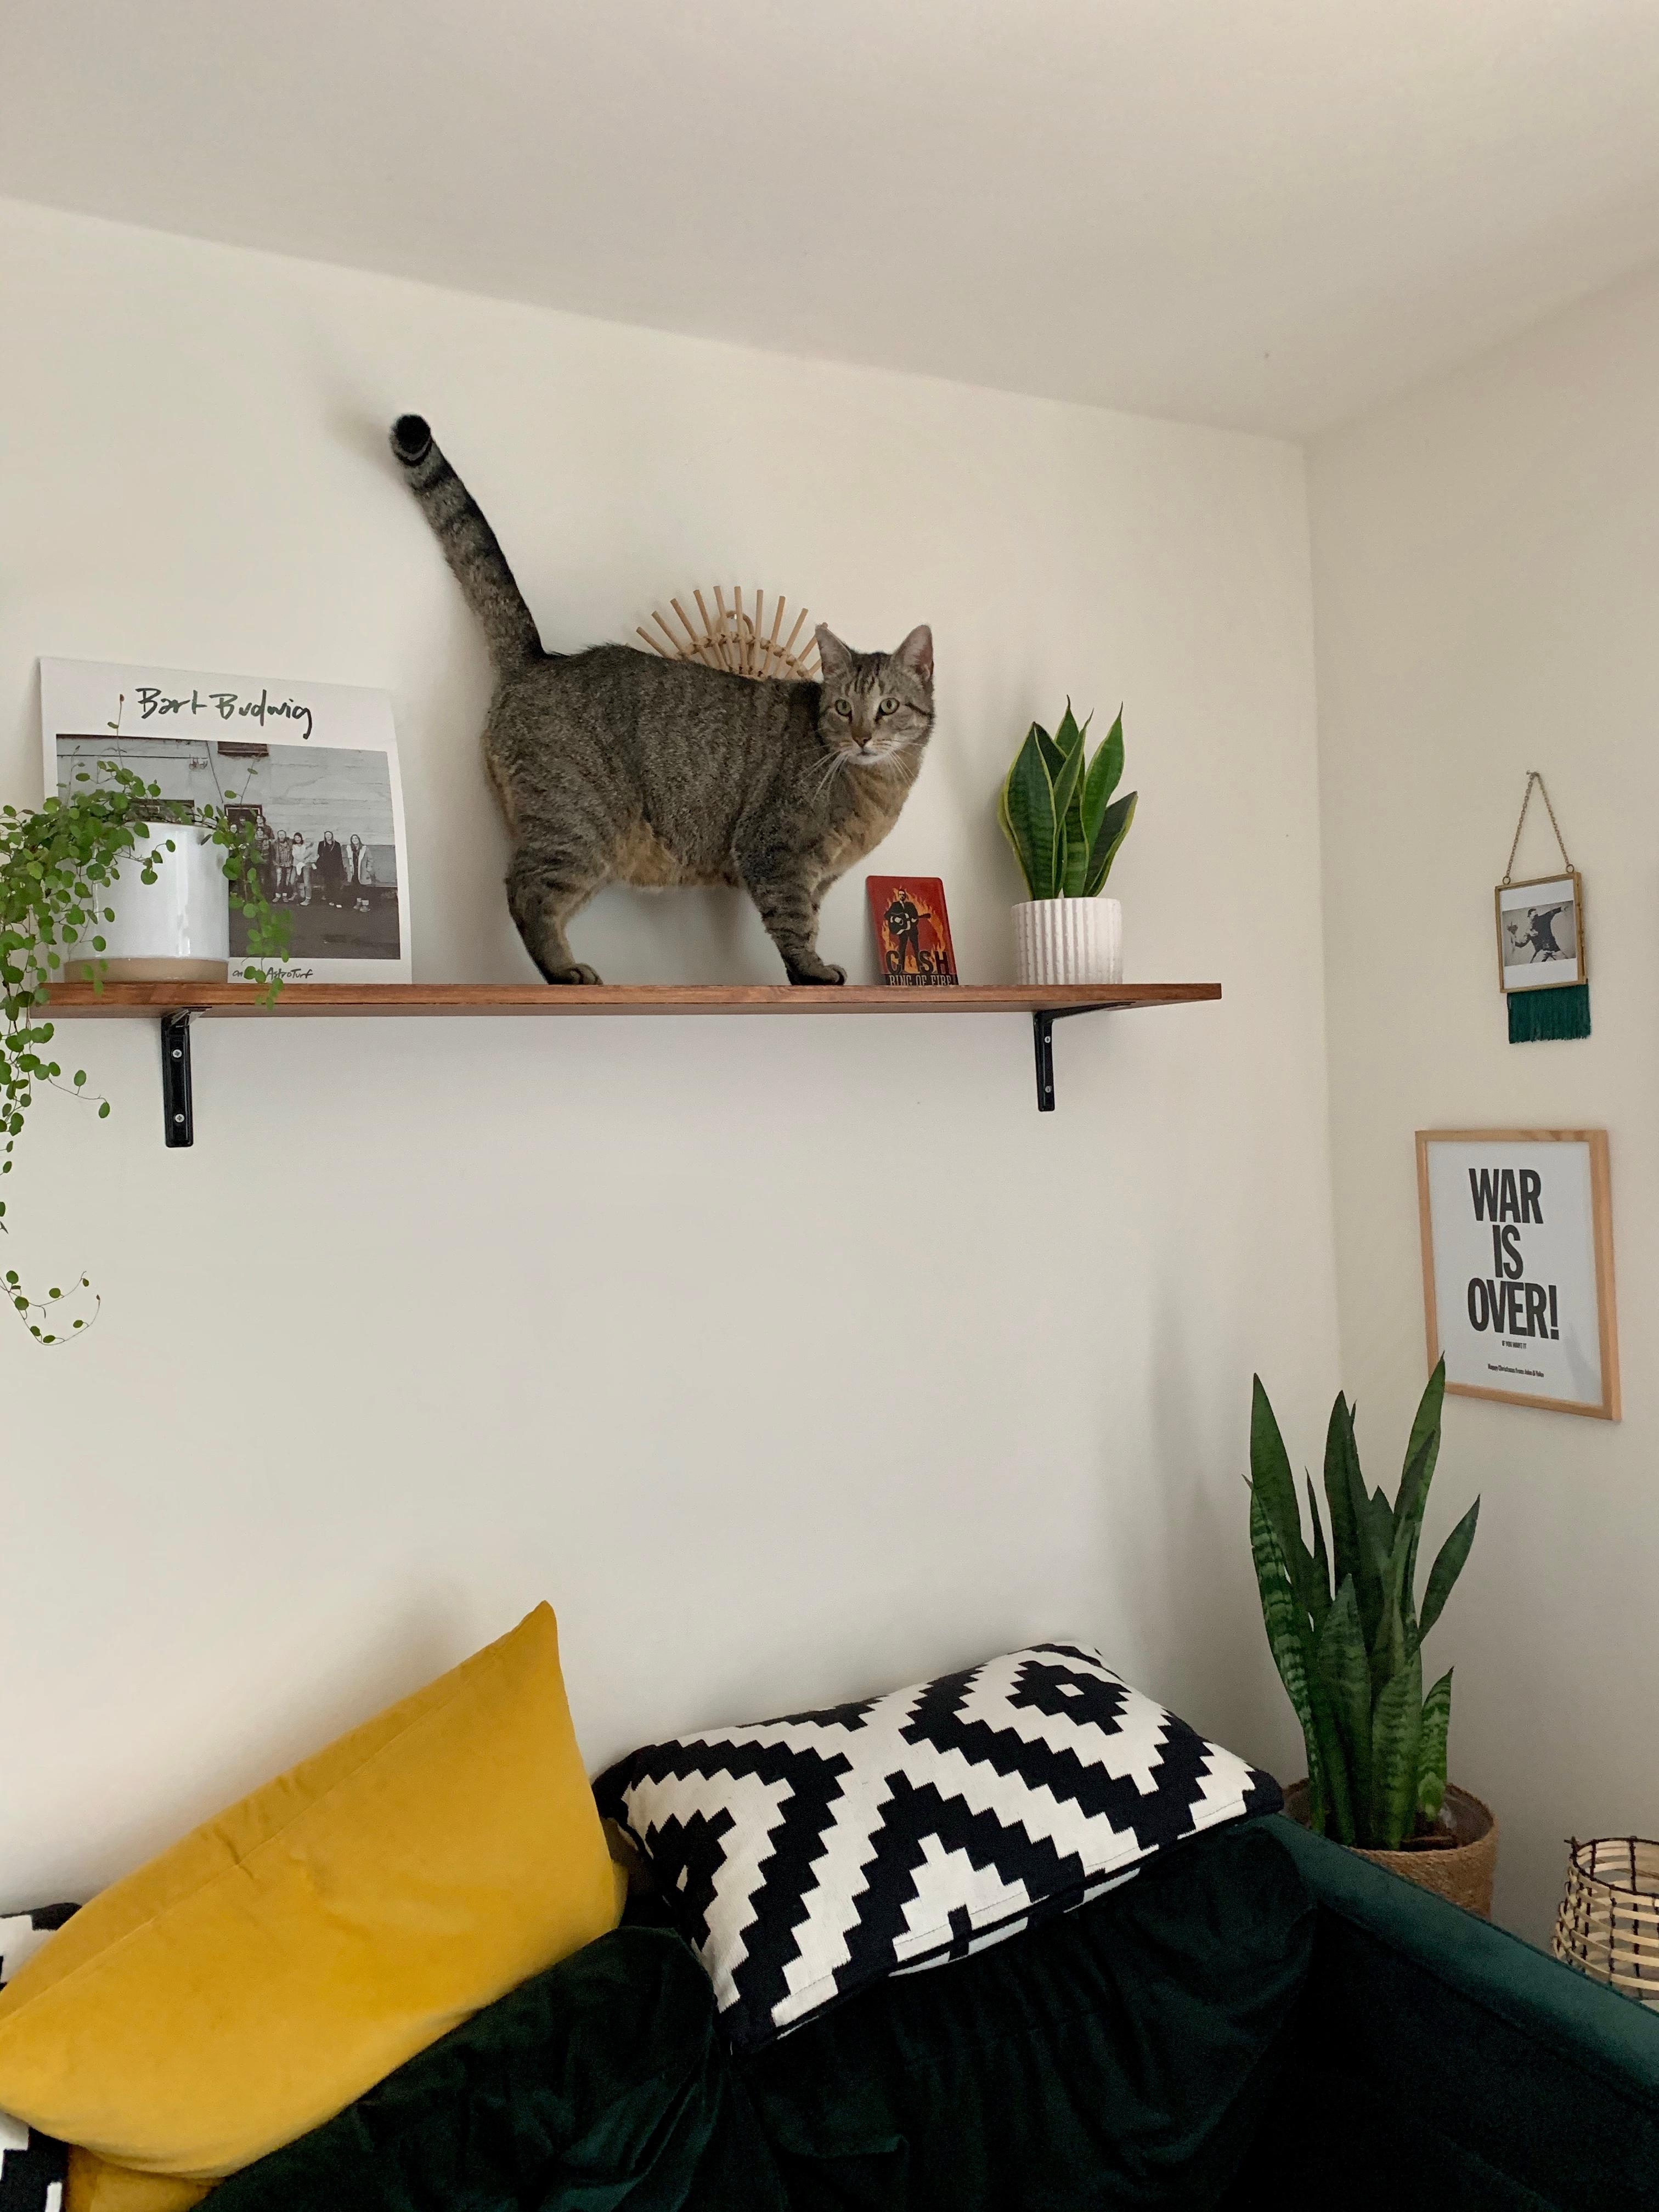 Cats‘n‘shelves 😼

#livingwithcats #catmom #diy